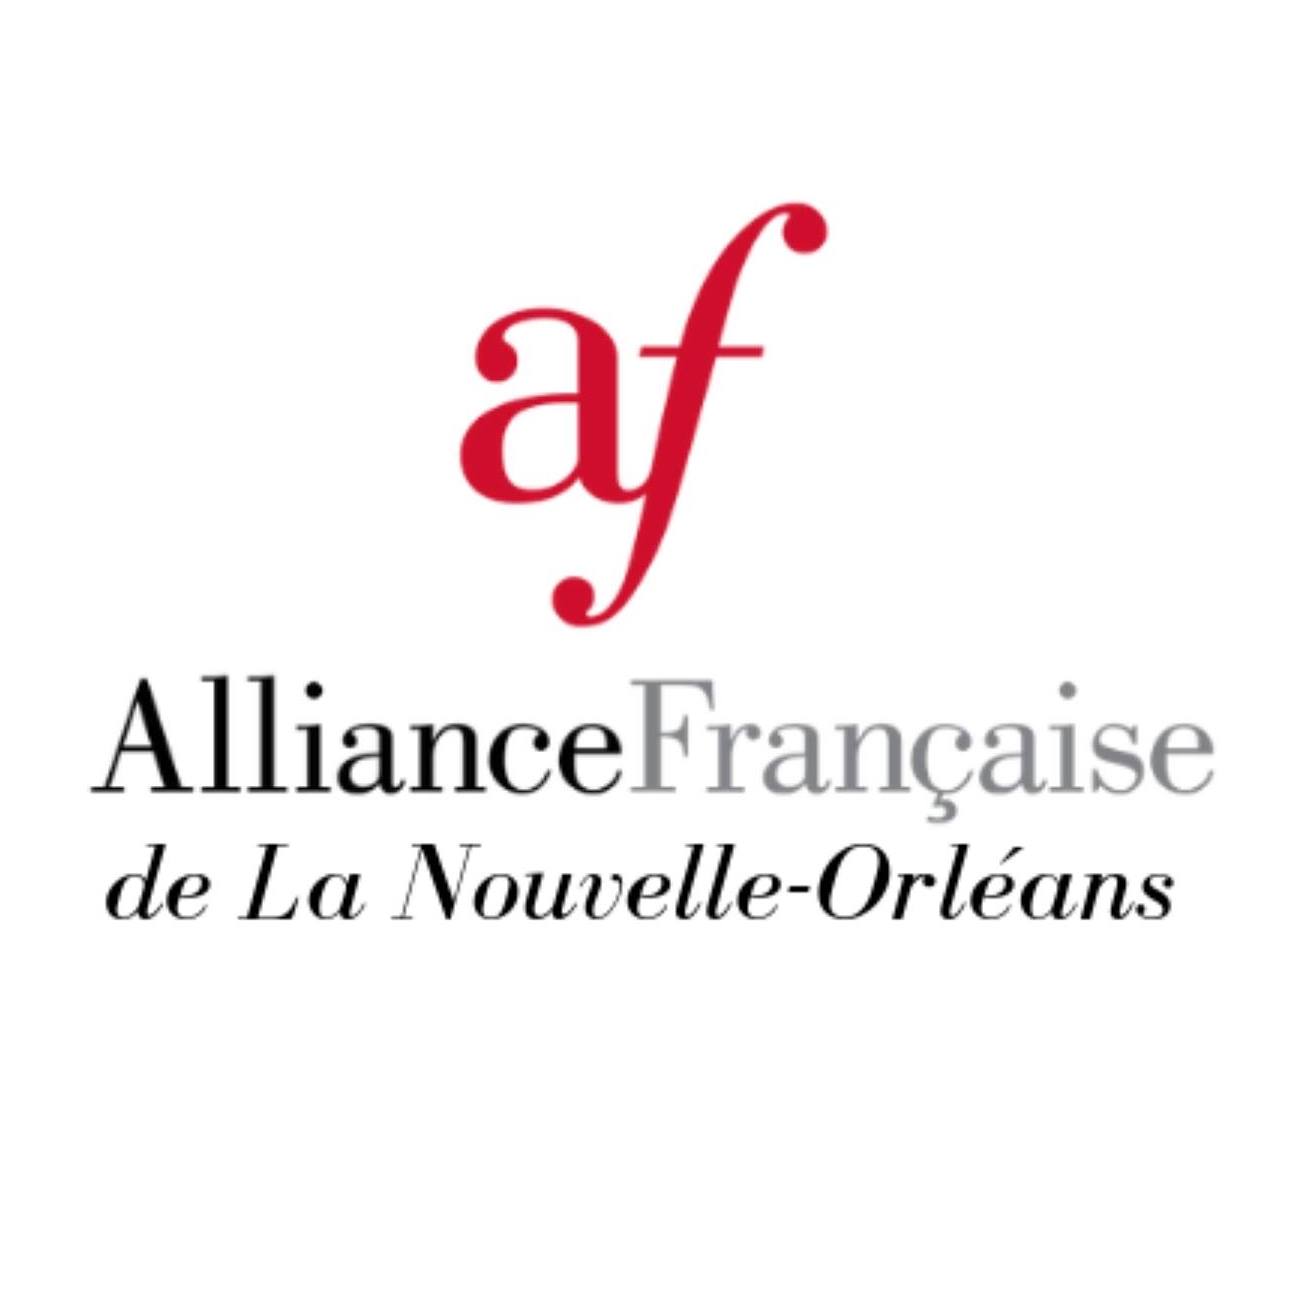 French Speaking Organizations in USA - Alliance Francaise de la Nouvelle Orléans